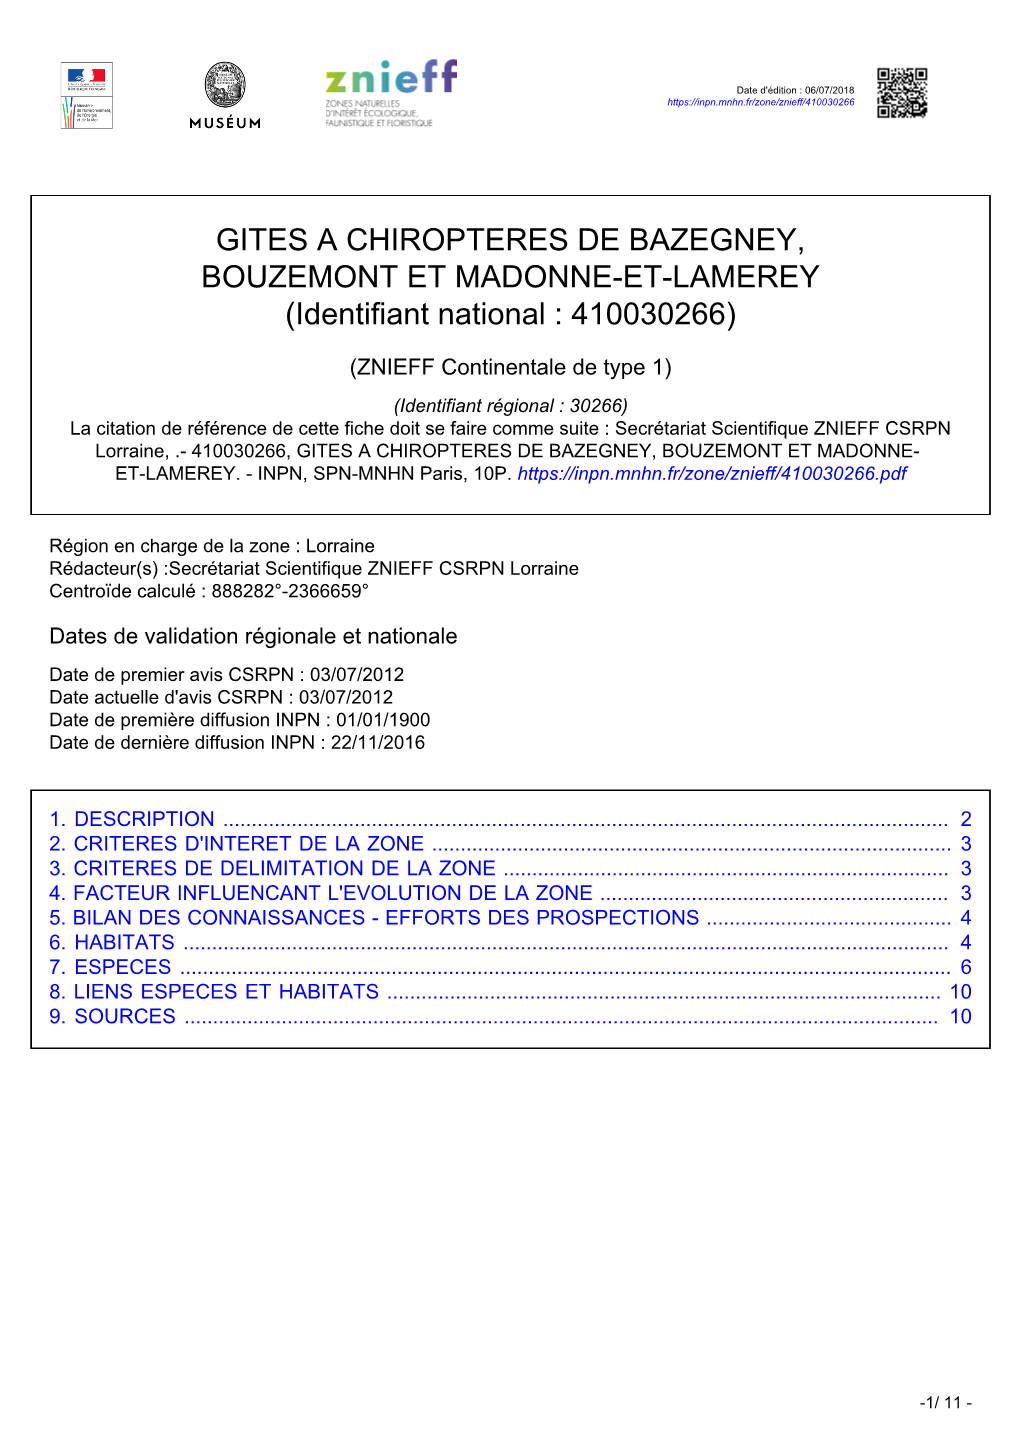 GITES a CHIROPTERES DE BAZEGNEY, BOUZEMONT ET MADONNE-ET-LAMEREY (Identifiant National : 410030266)